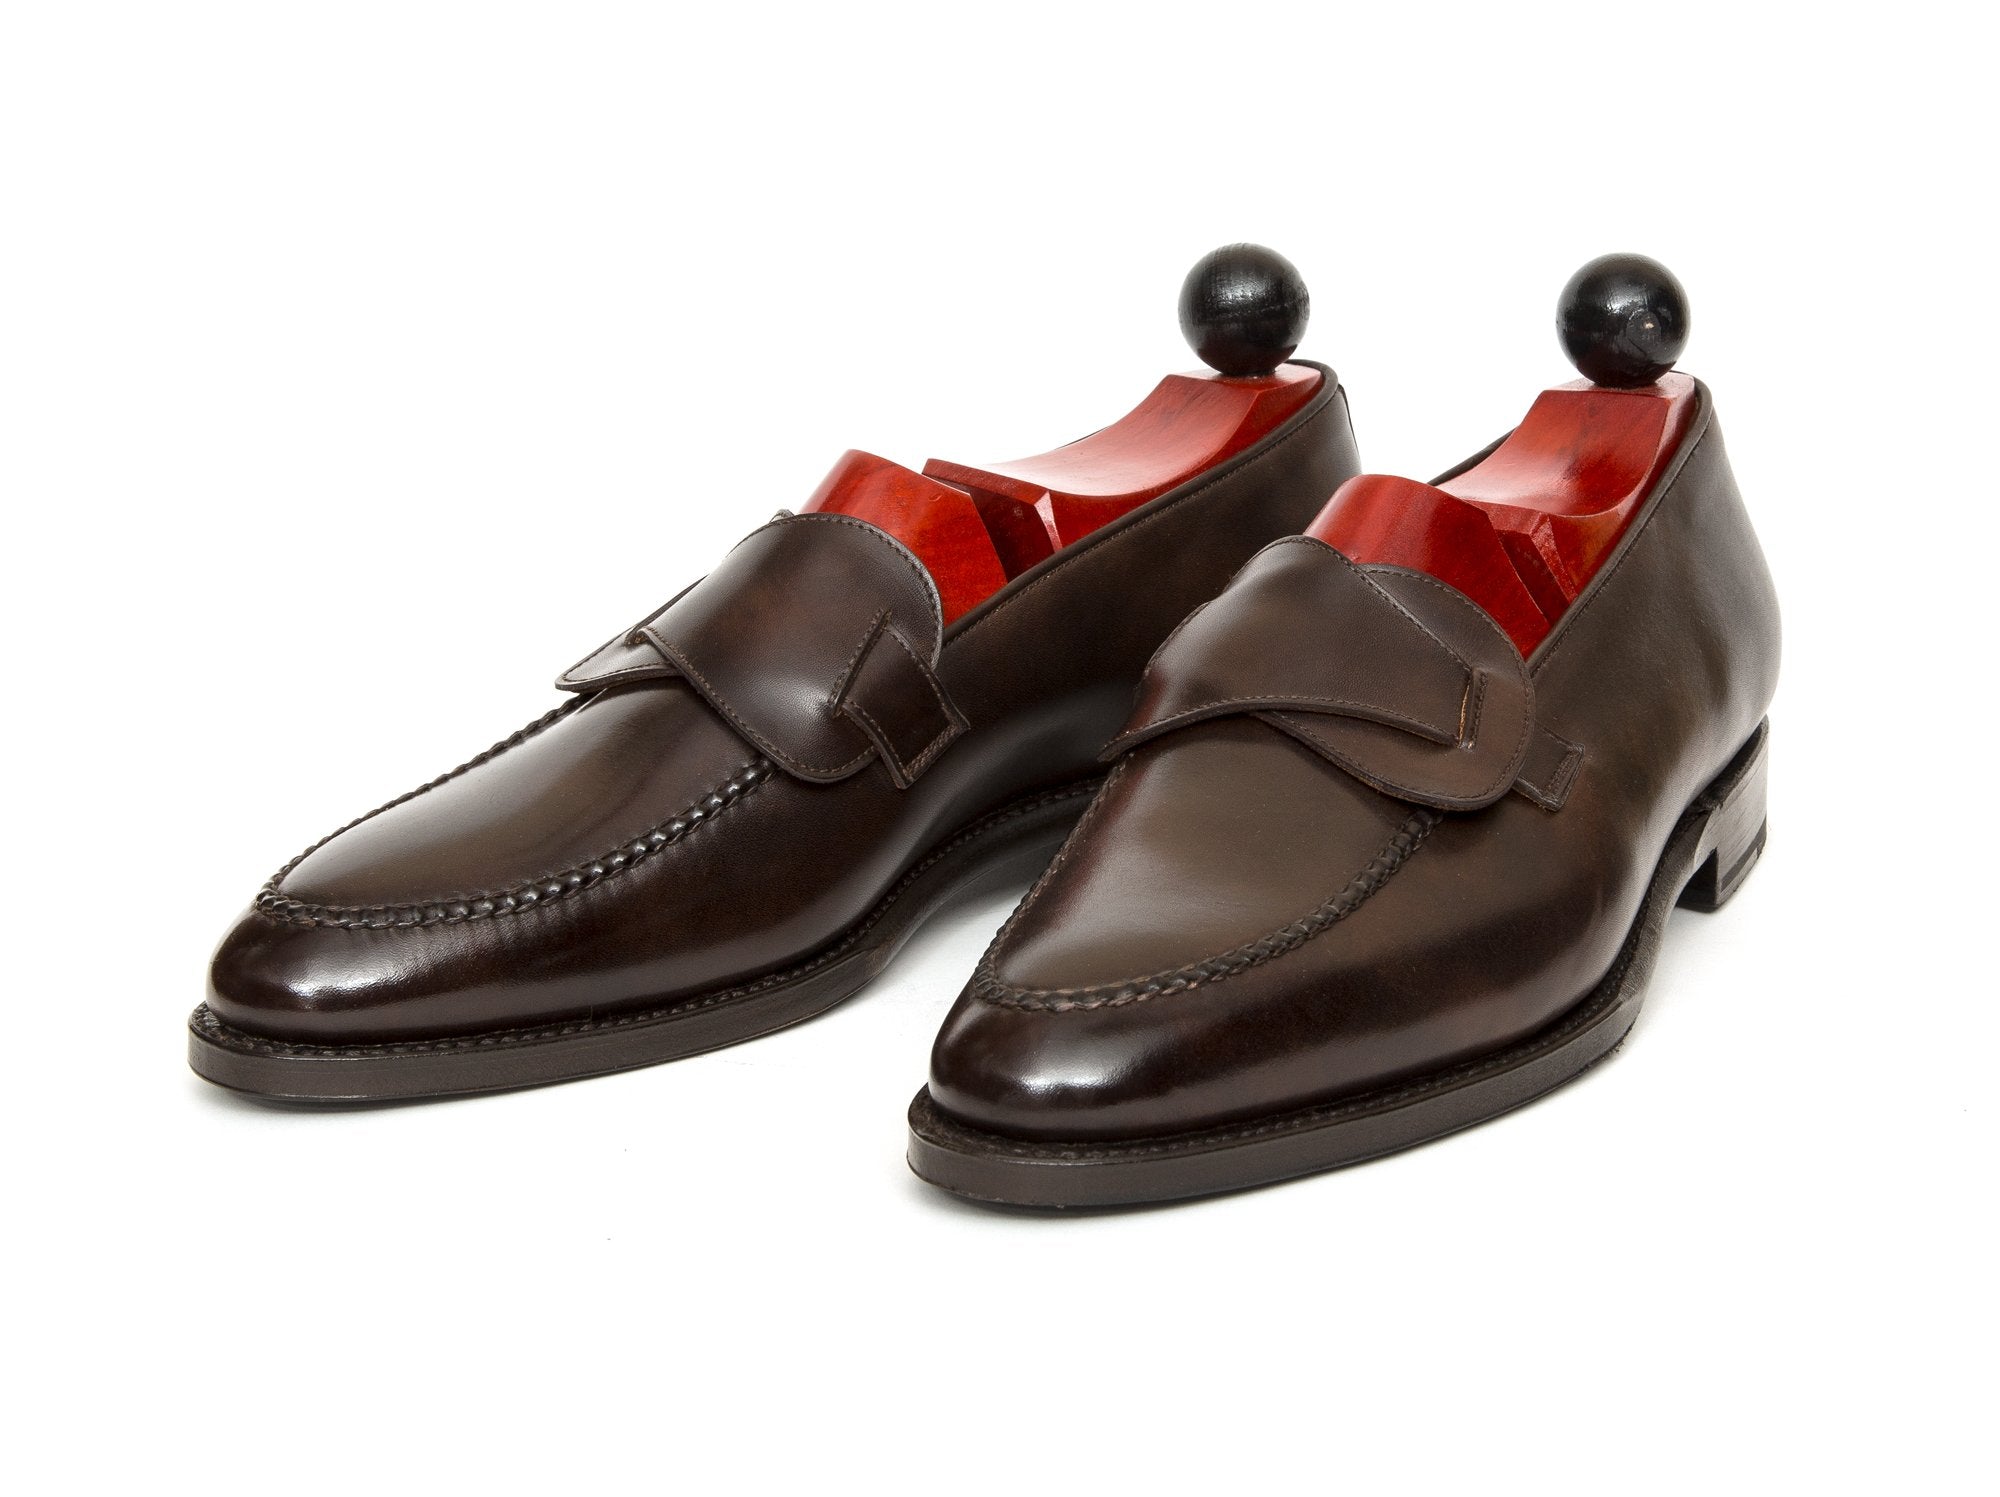 J.FitzPatrick Footwear - Hawthorne - Dark Brown Museum Calf - TMG Last